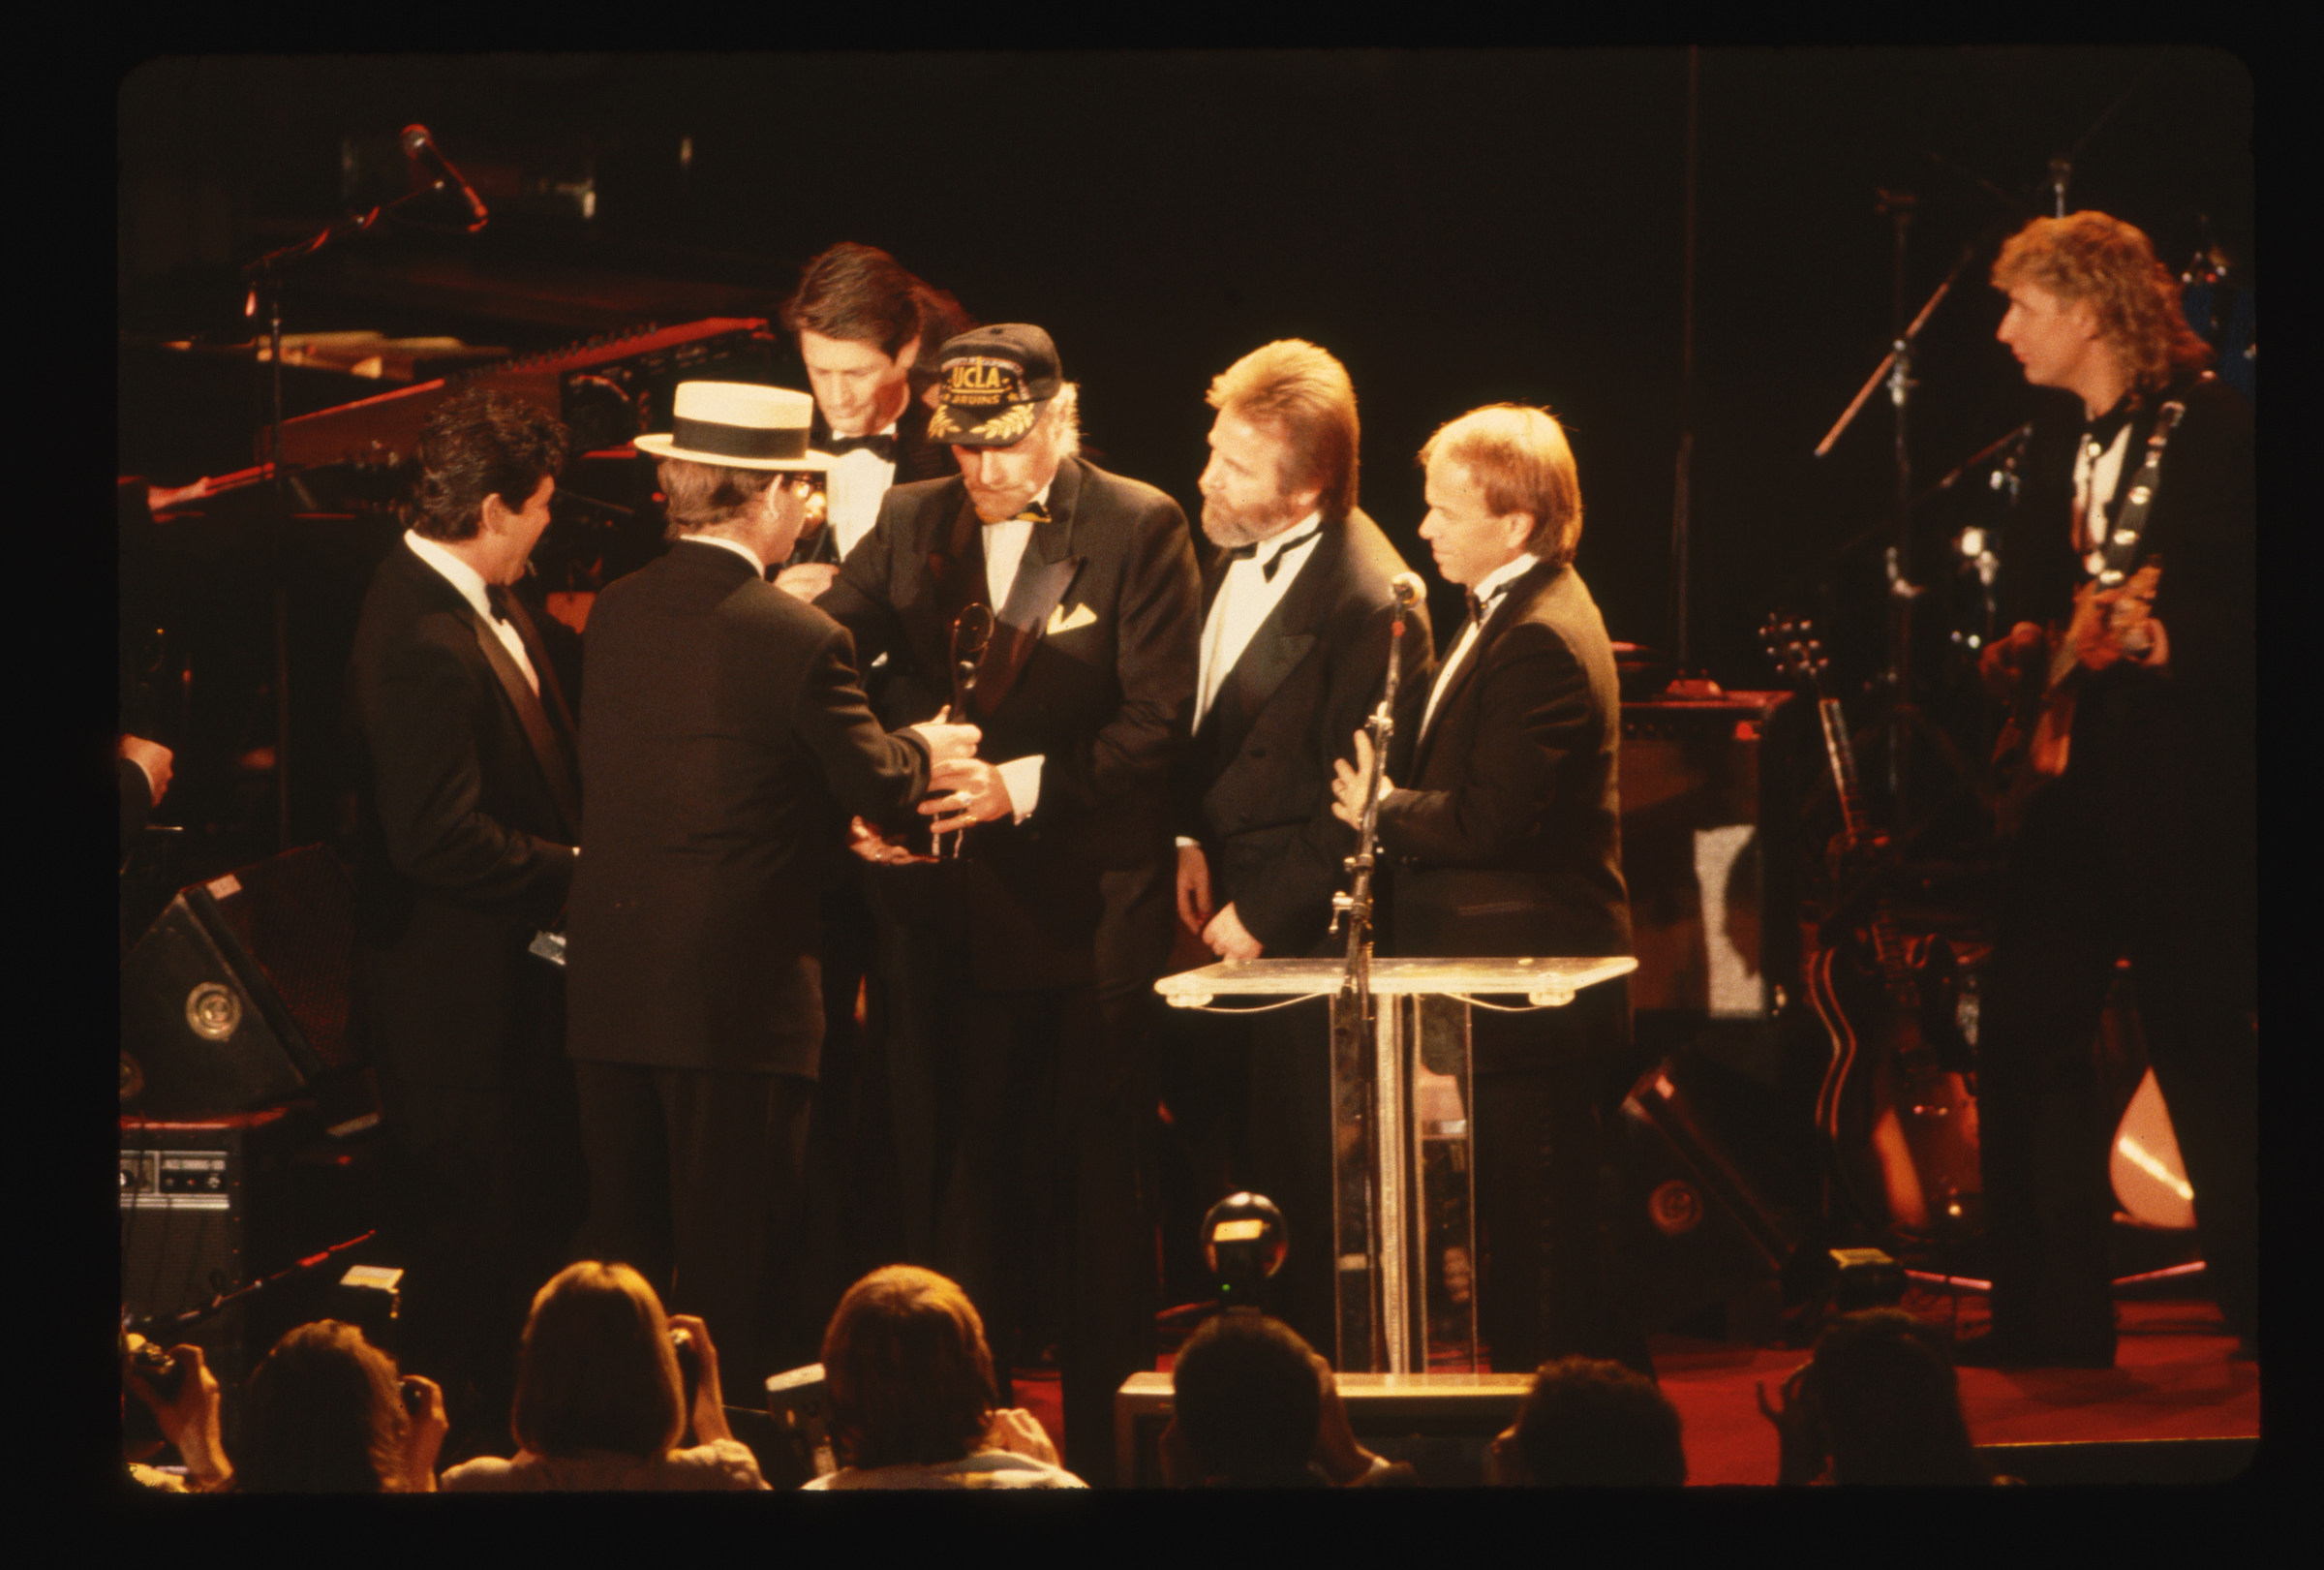 Singer Elton John presents The Beach Boys with trophies